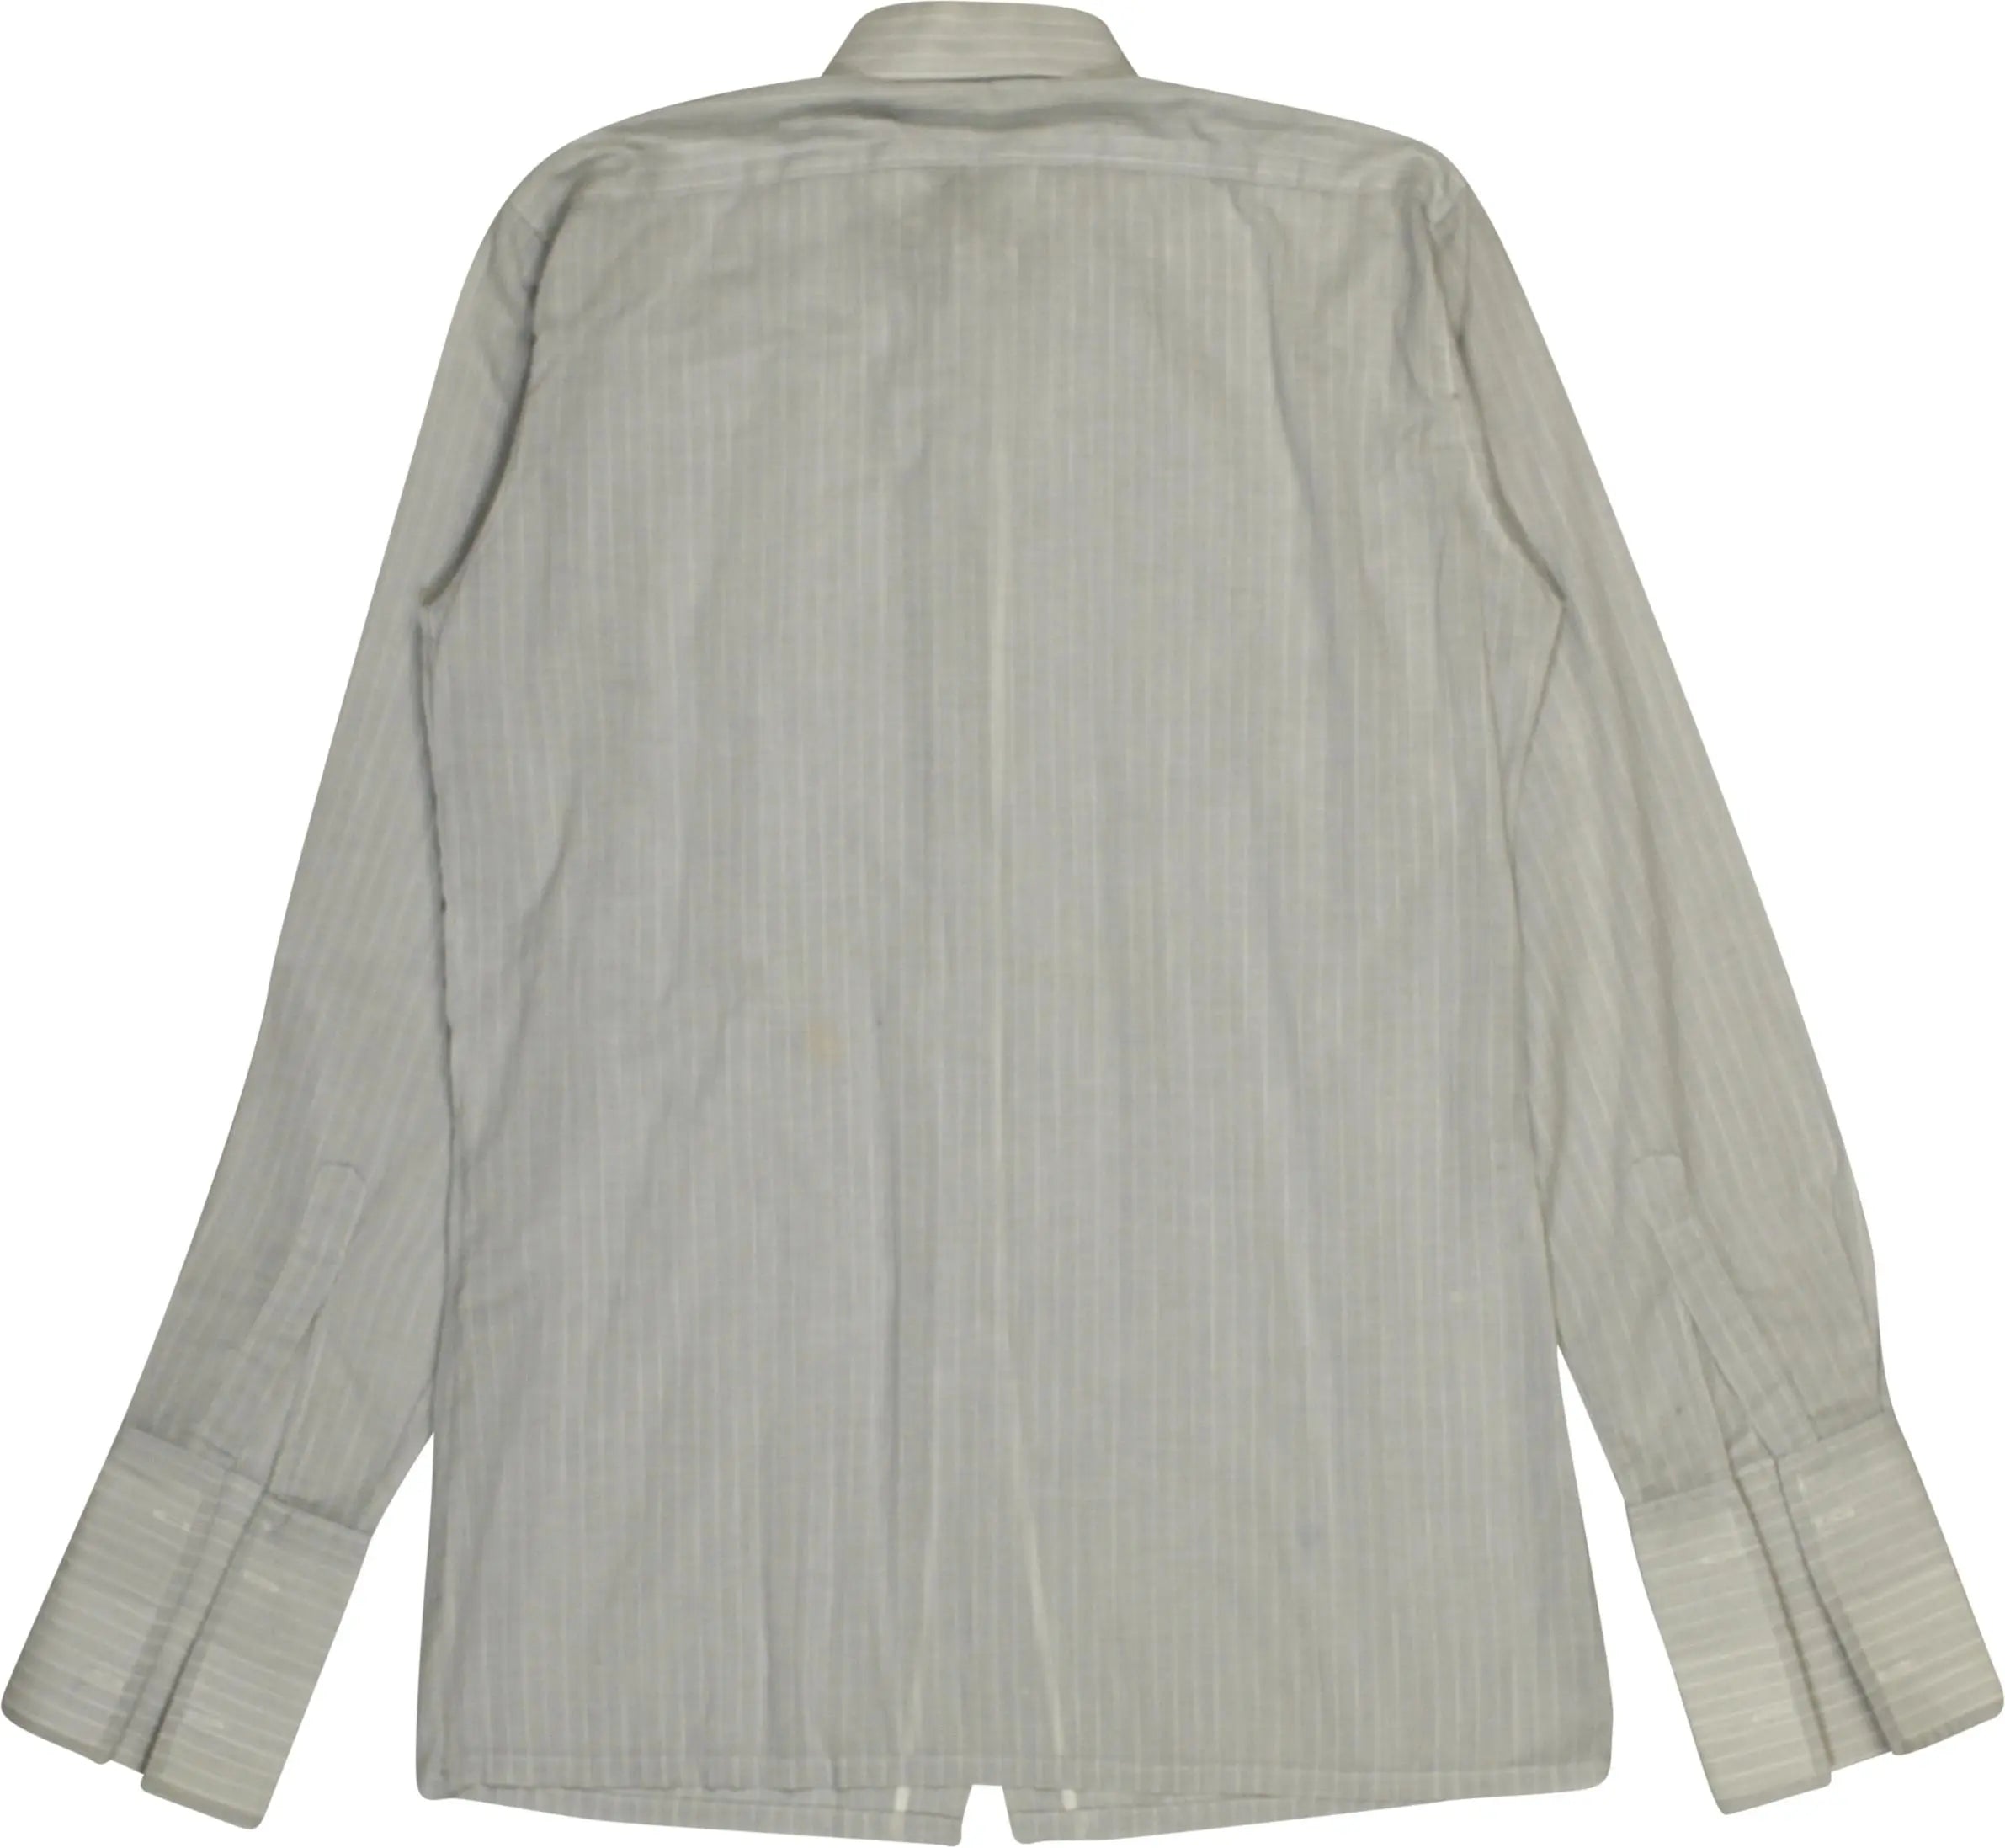 Jacques Esterel - Blue Striped Shirt- ThriftTale.com - Vintage and second handclothing